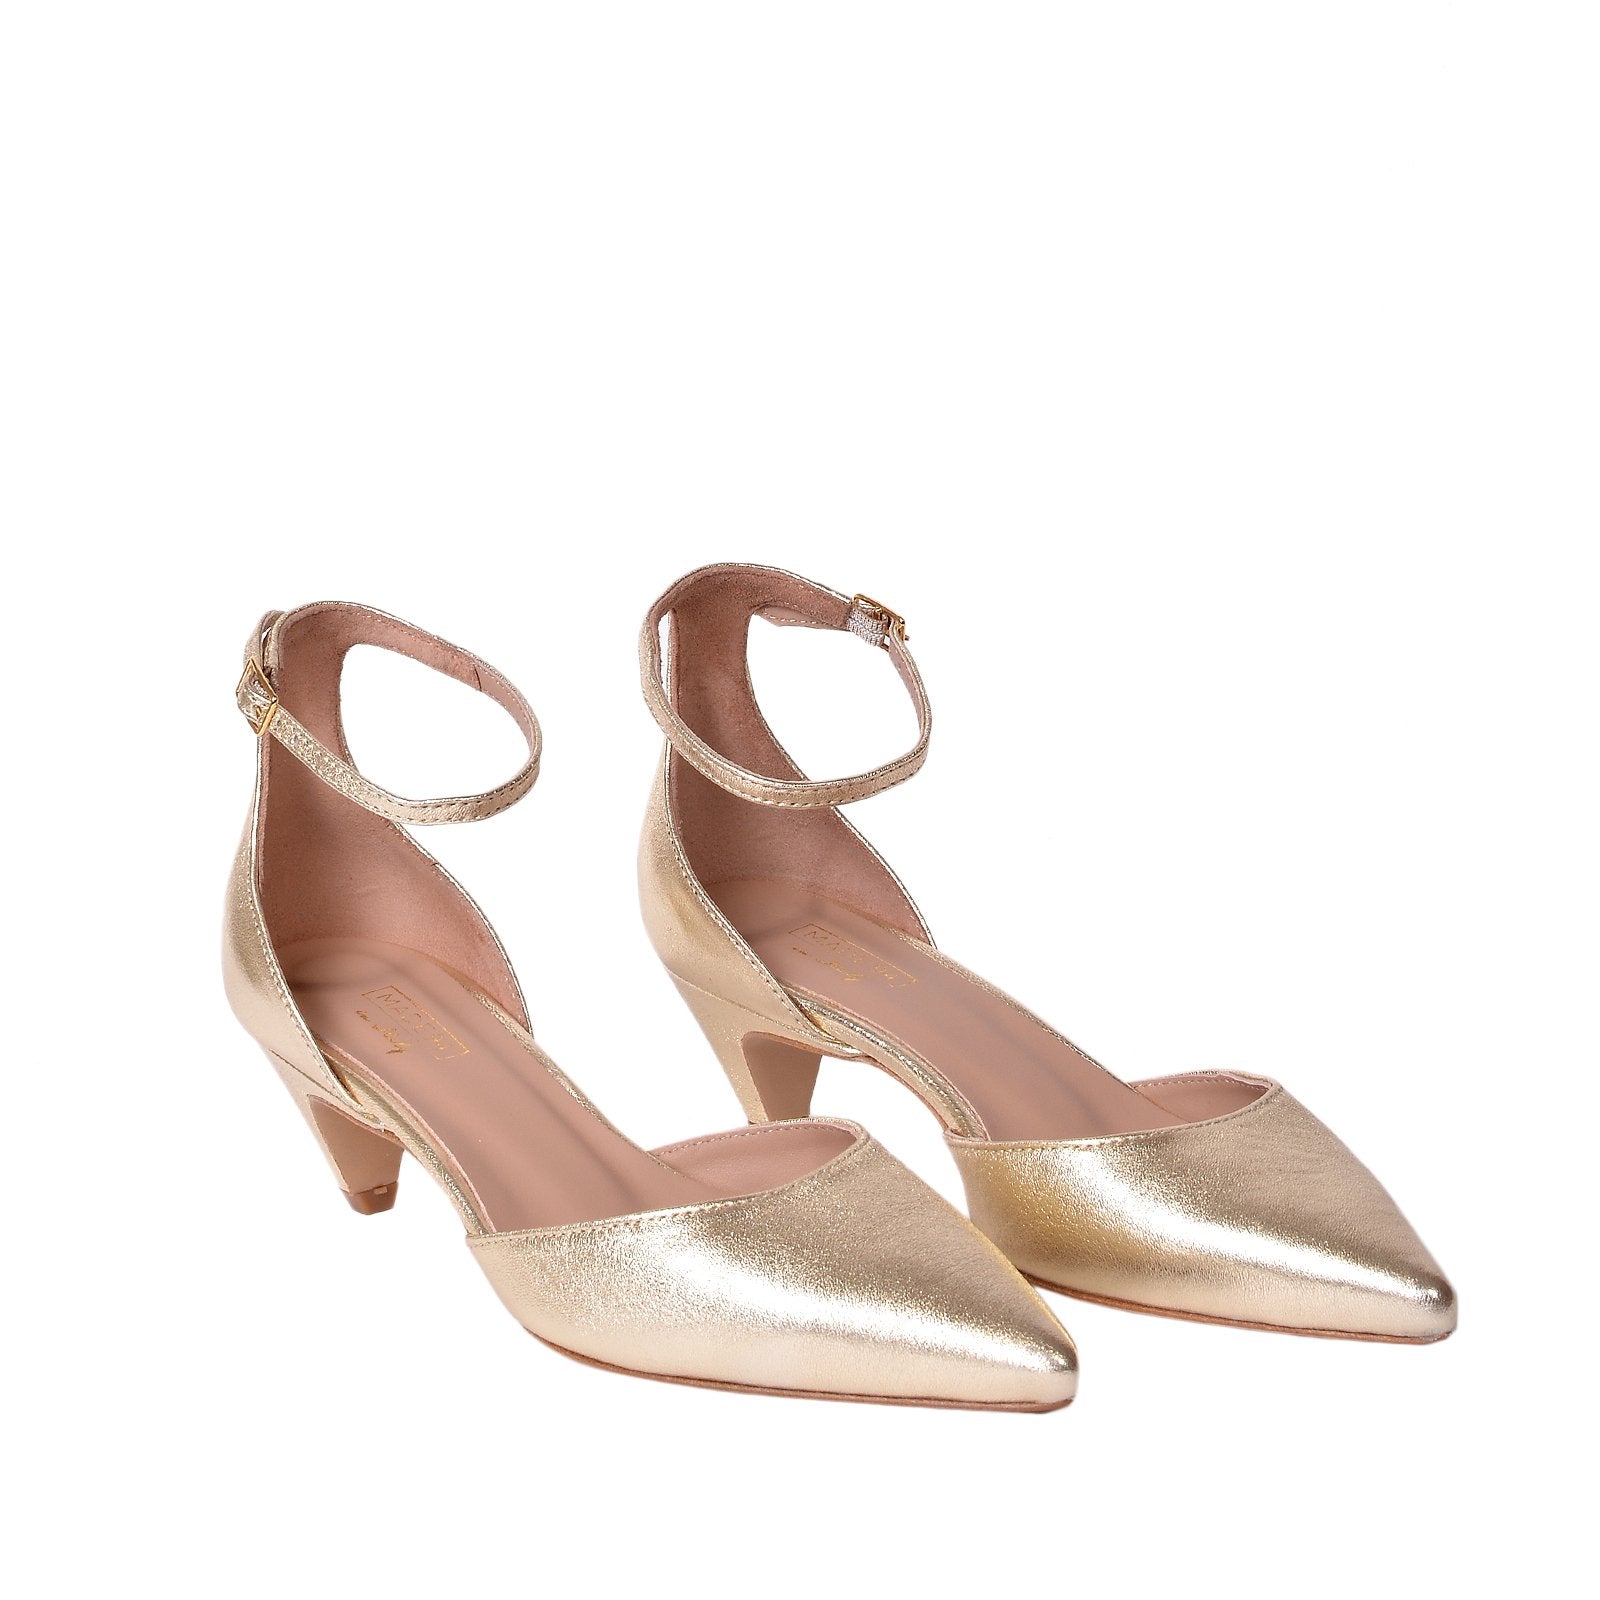 Viki Metallic Gold Leather Shoes Heels 790-015-1 - 2